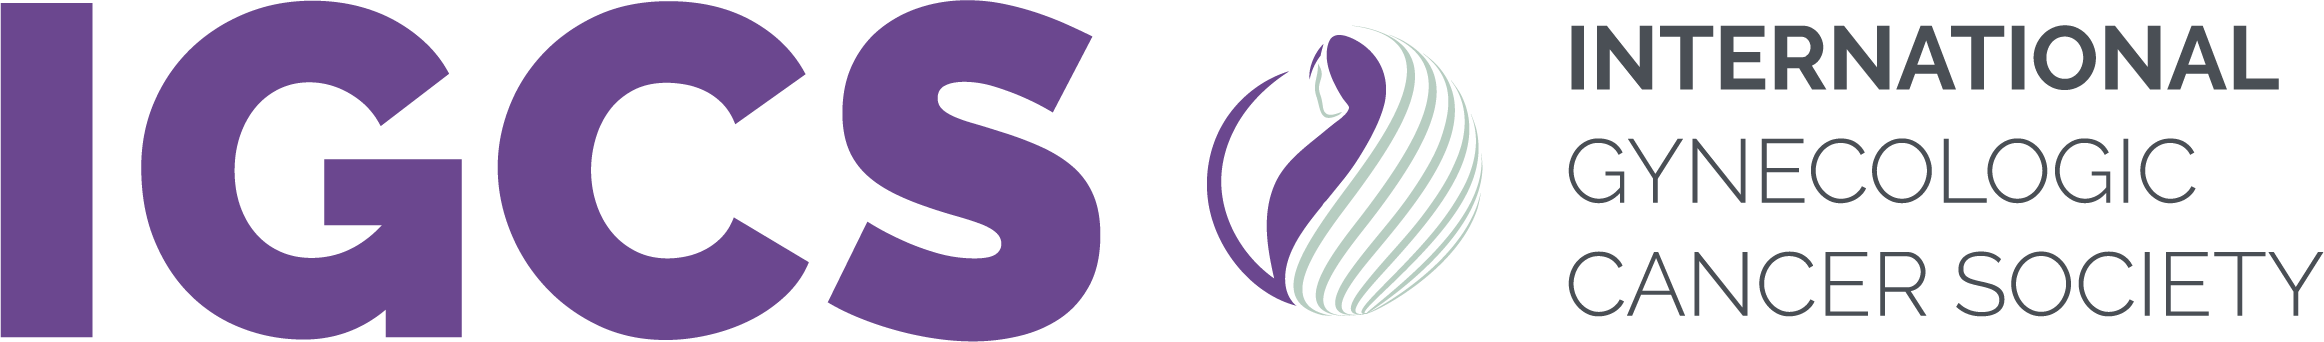 International Gynecologic Cancer Society logo